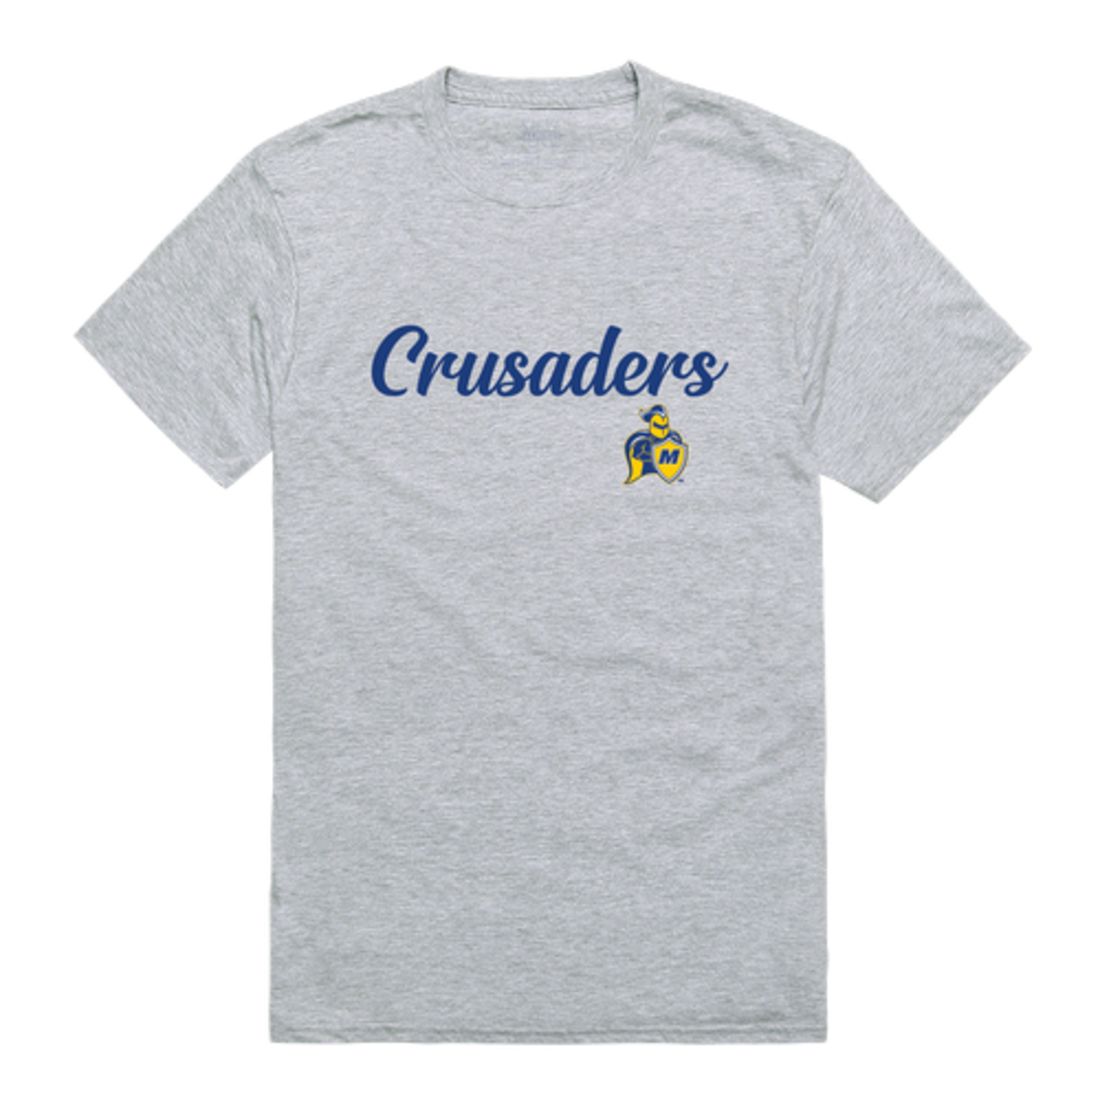 Madonna University Crusaders Script T-Shirt Tee